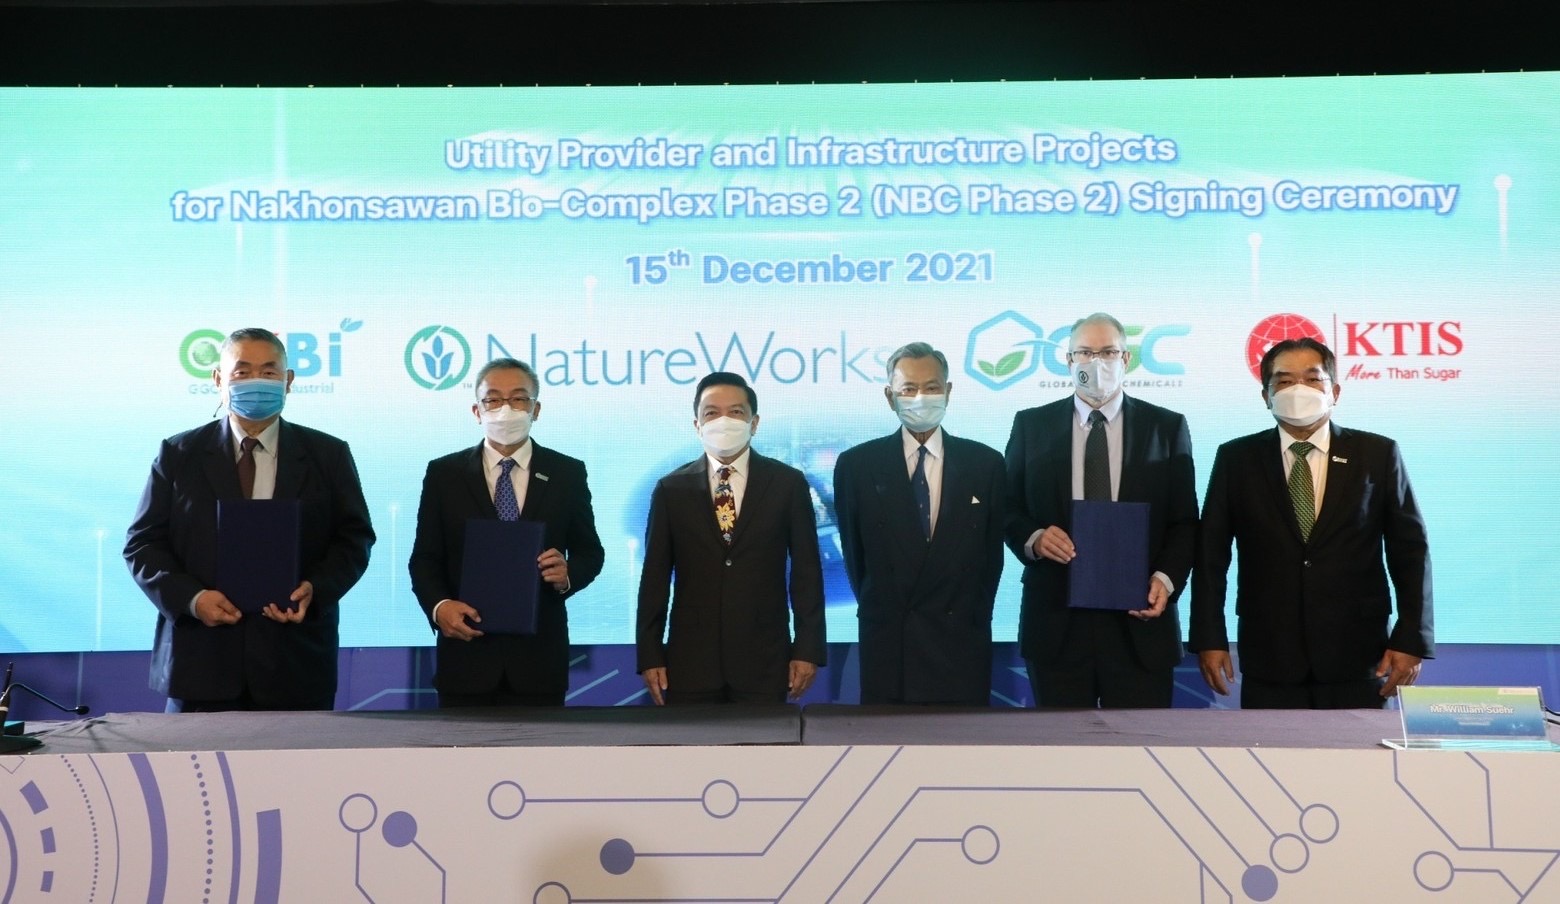 GKBI บริษัทร่วมทุนระหว่าง GGC และ KTIS จับมือ NatureWorks Asia Pacific ลงนามสัญญาลงทุนโครงการ UtilityProvider และ Infrastructure สำหรับโครงการนครสวรรค์ไบโอคอมเพล็กซ์ระยะที่ 2